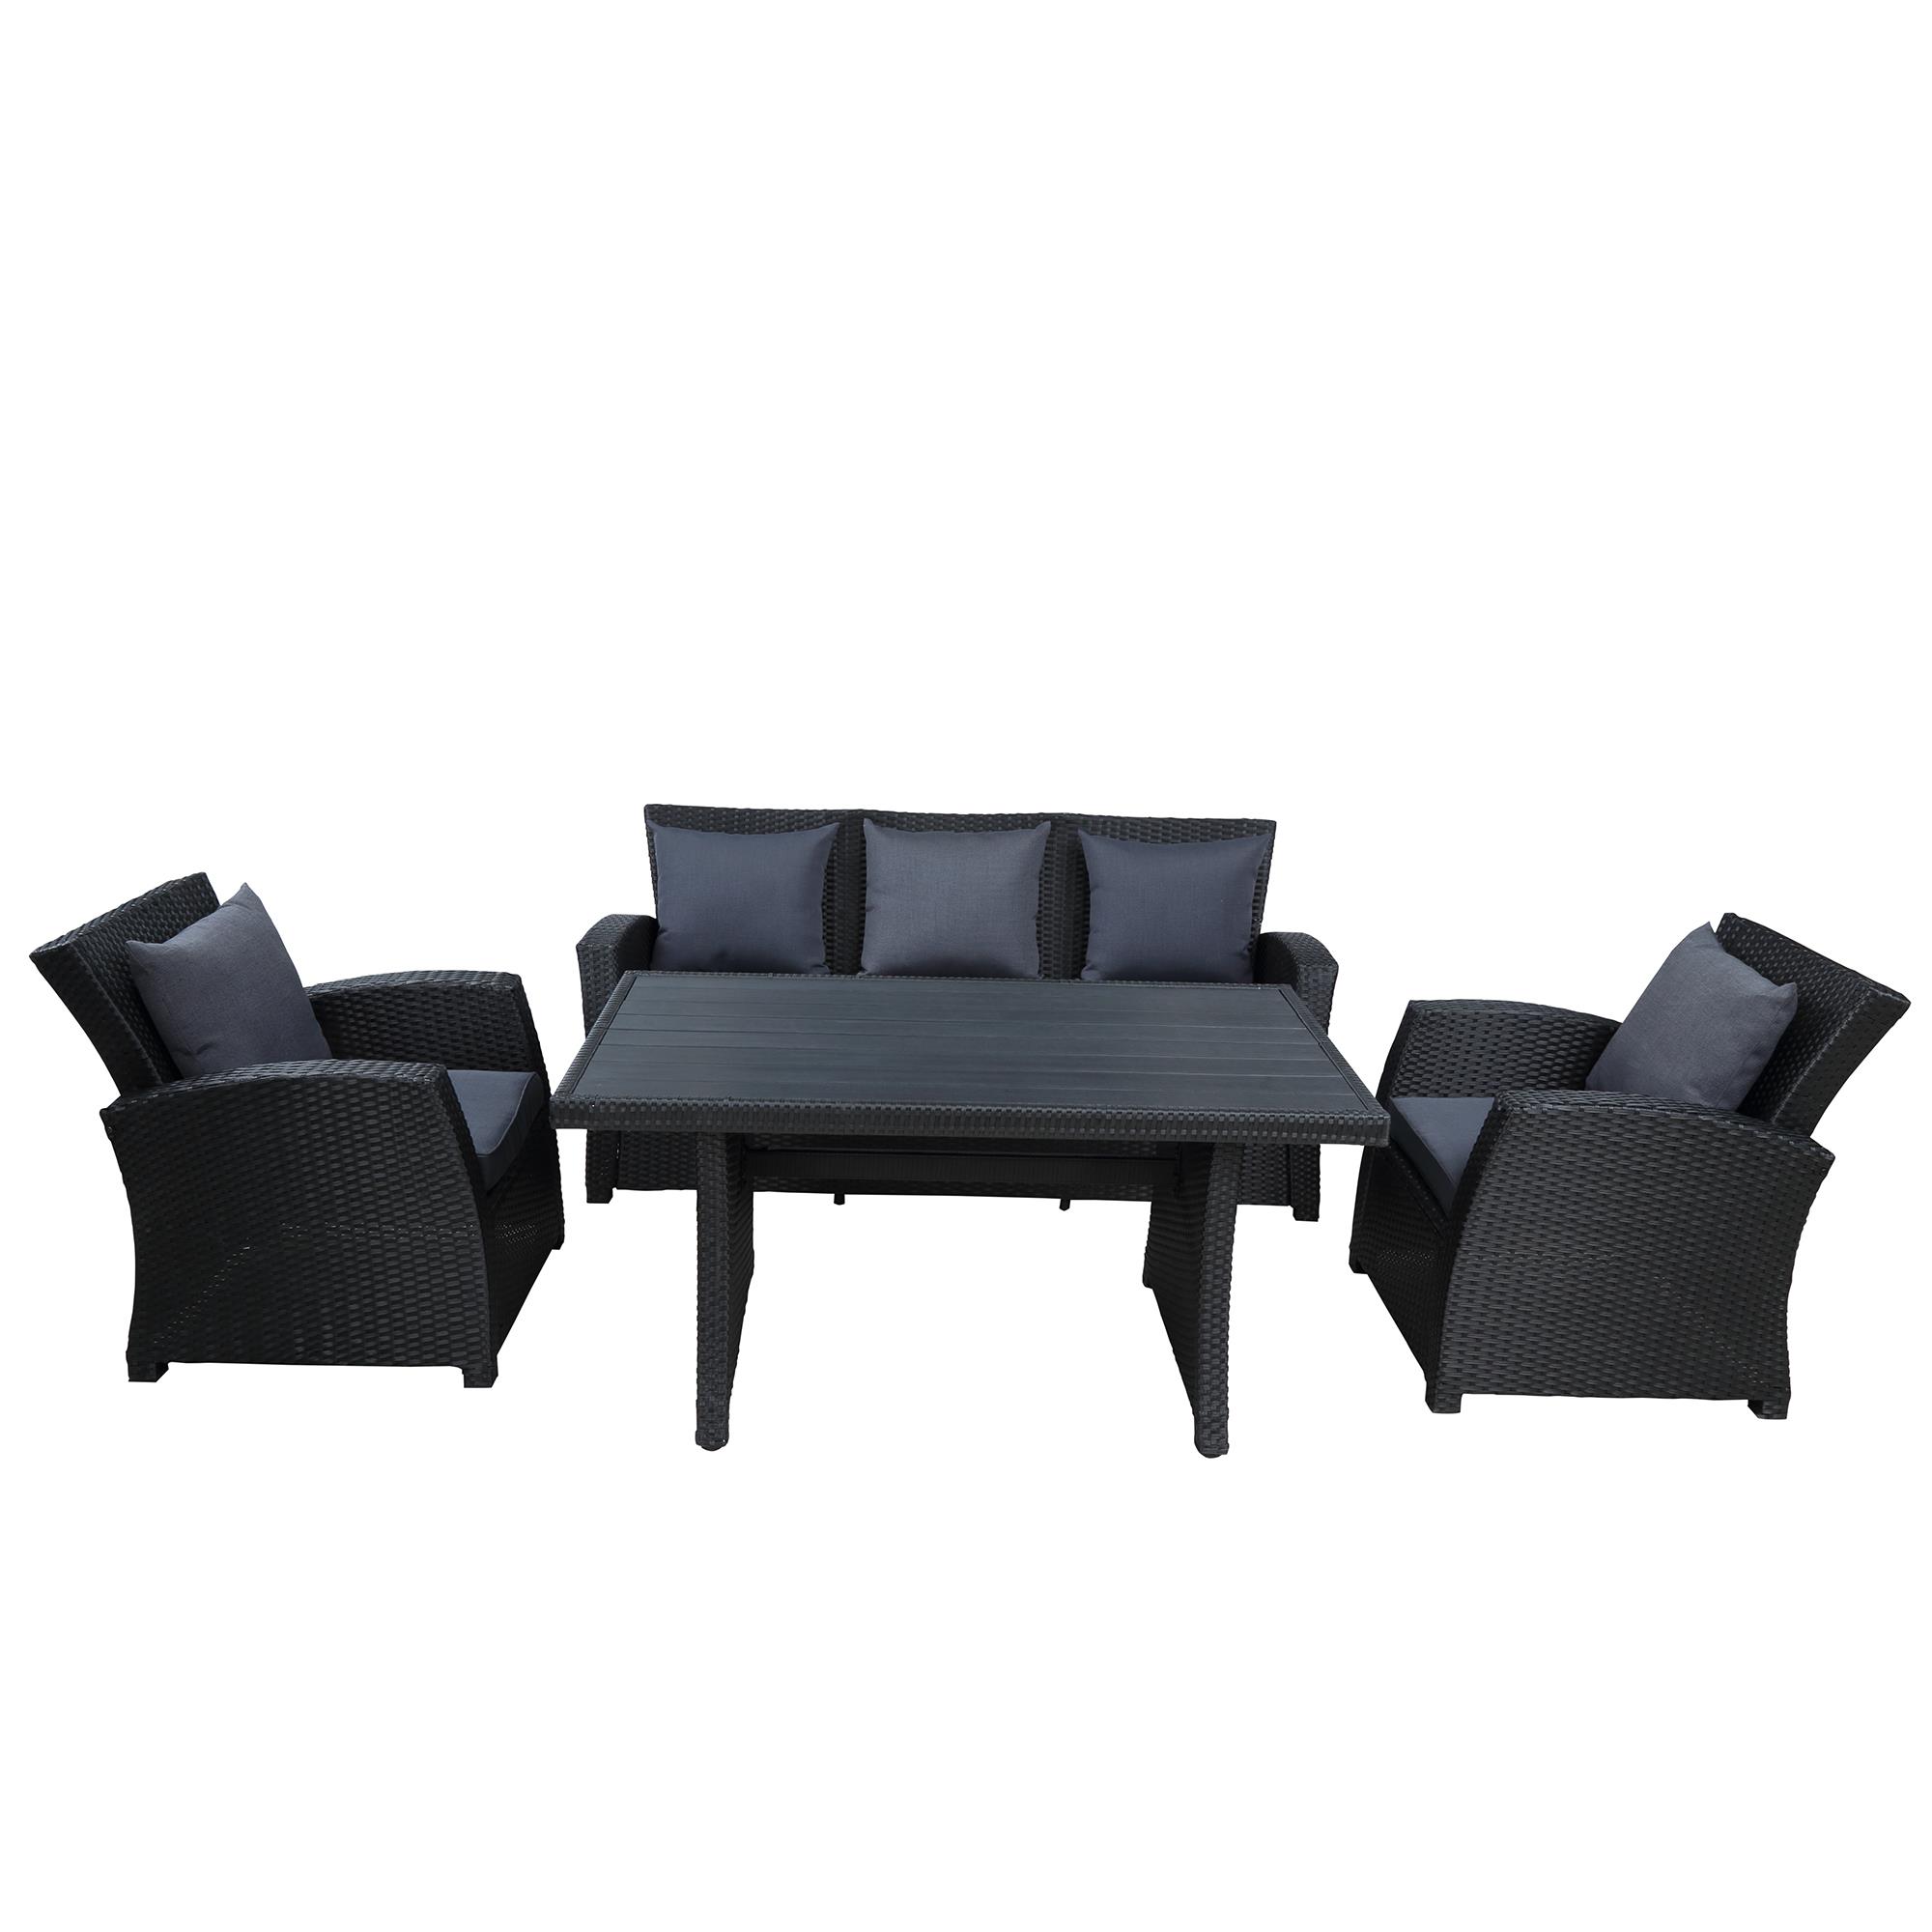 Baytocare Outdoor Patio Furniture Set 4-Piece Conversation Set Black Wicker Furniture Sofa Set with Dark Grey Cushions - image 2 of 5